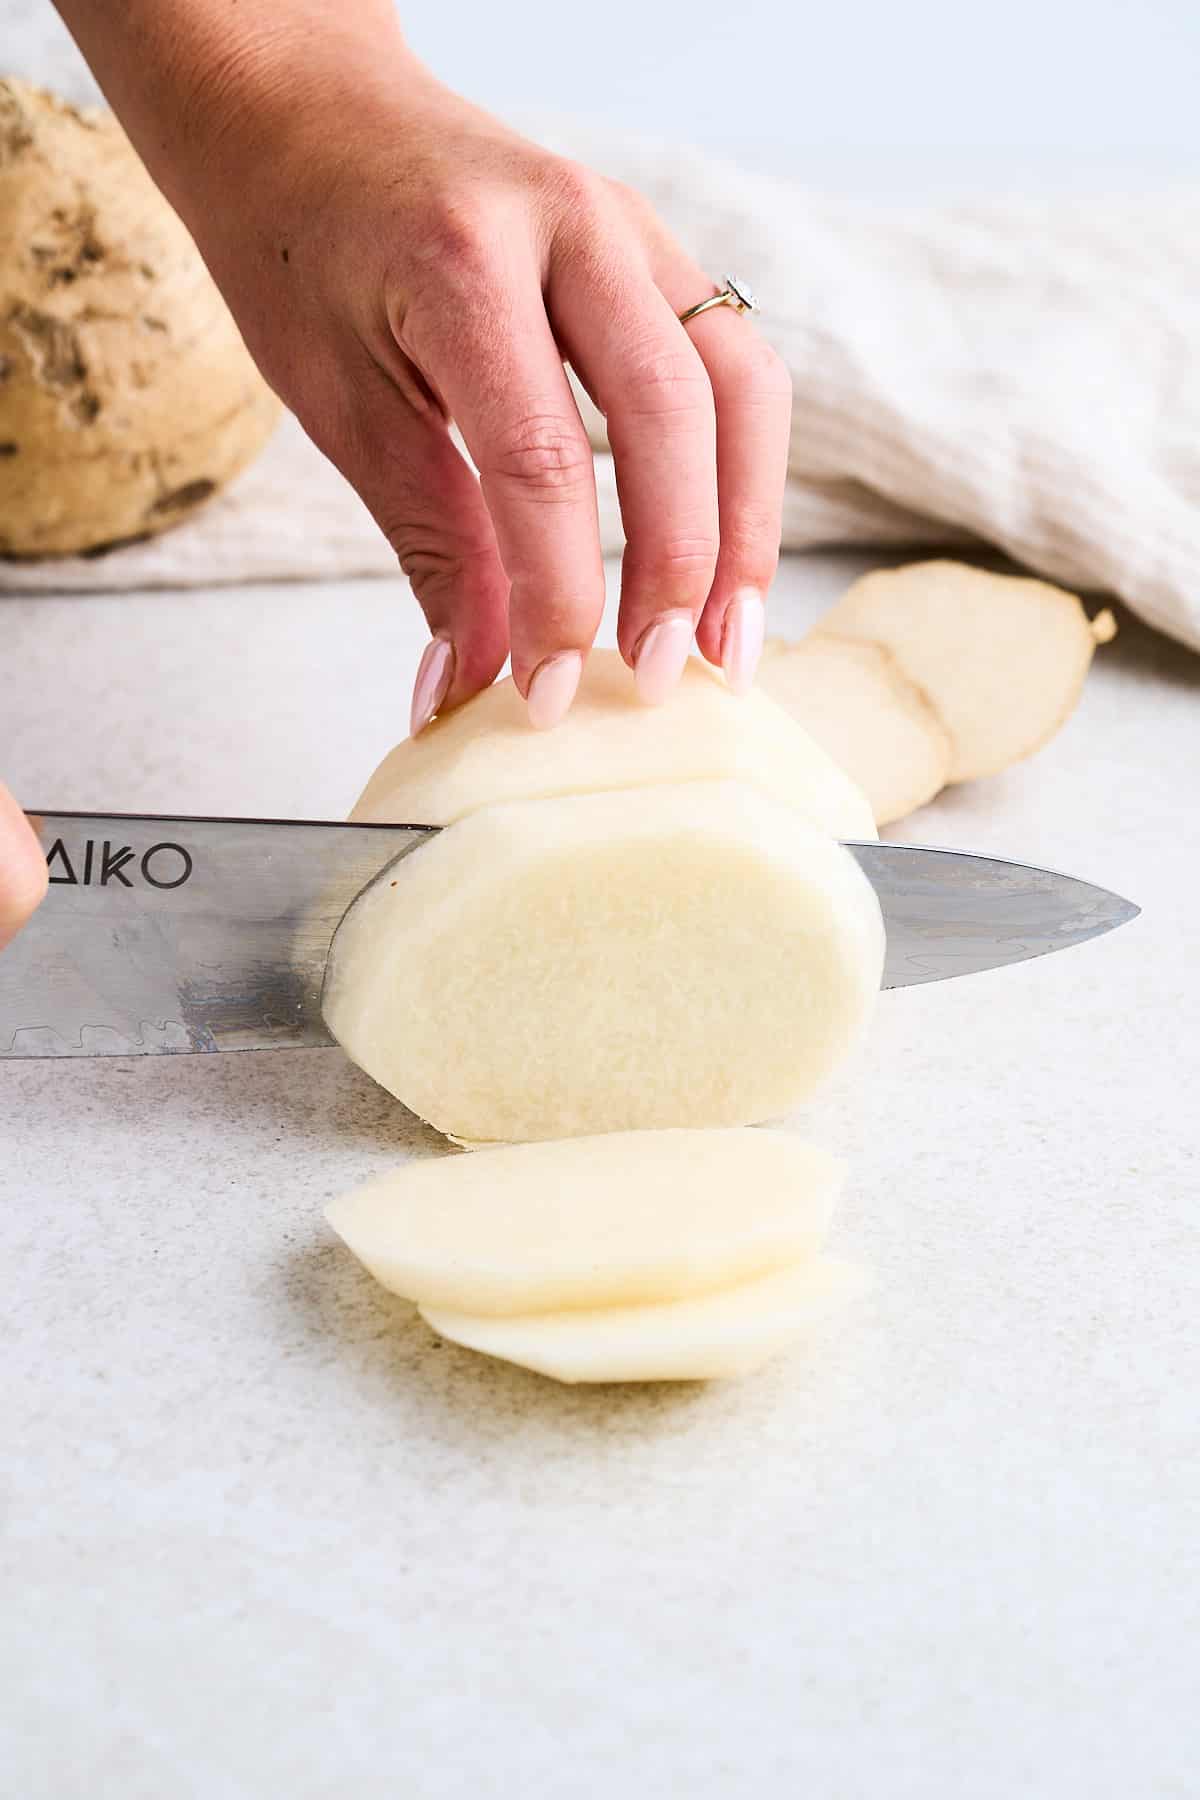 Cutting jicama into slabs.